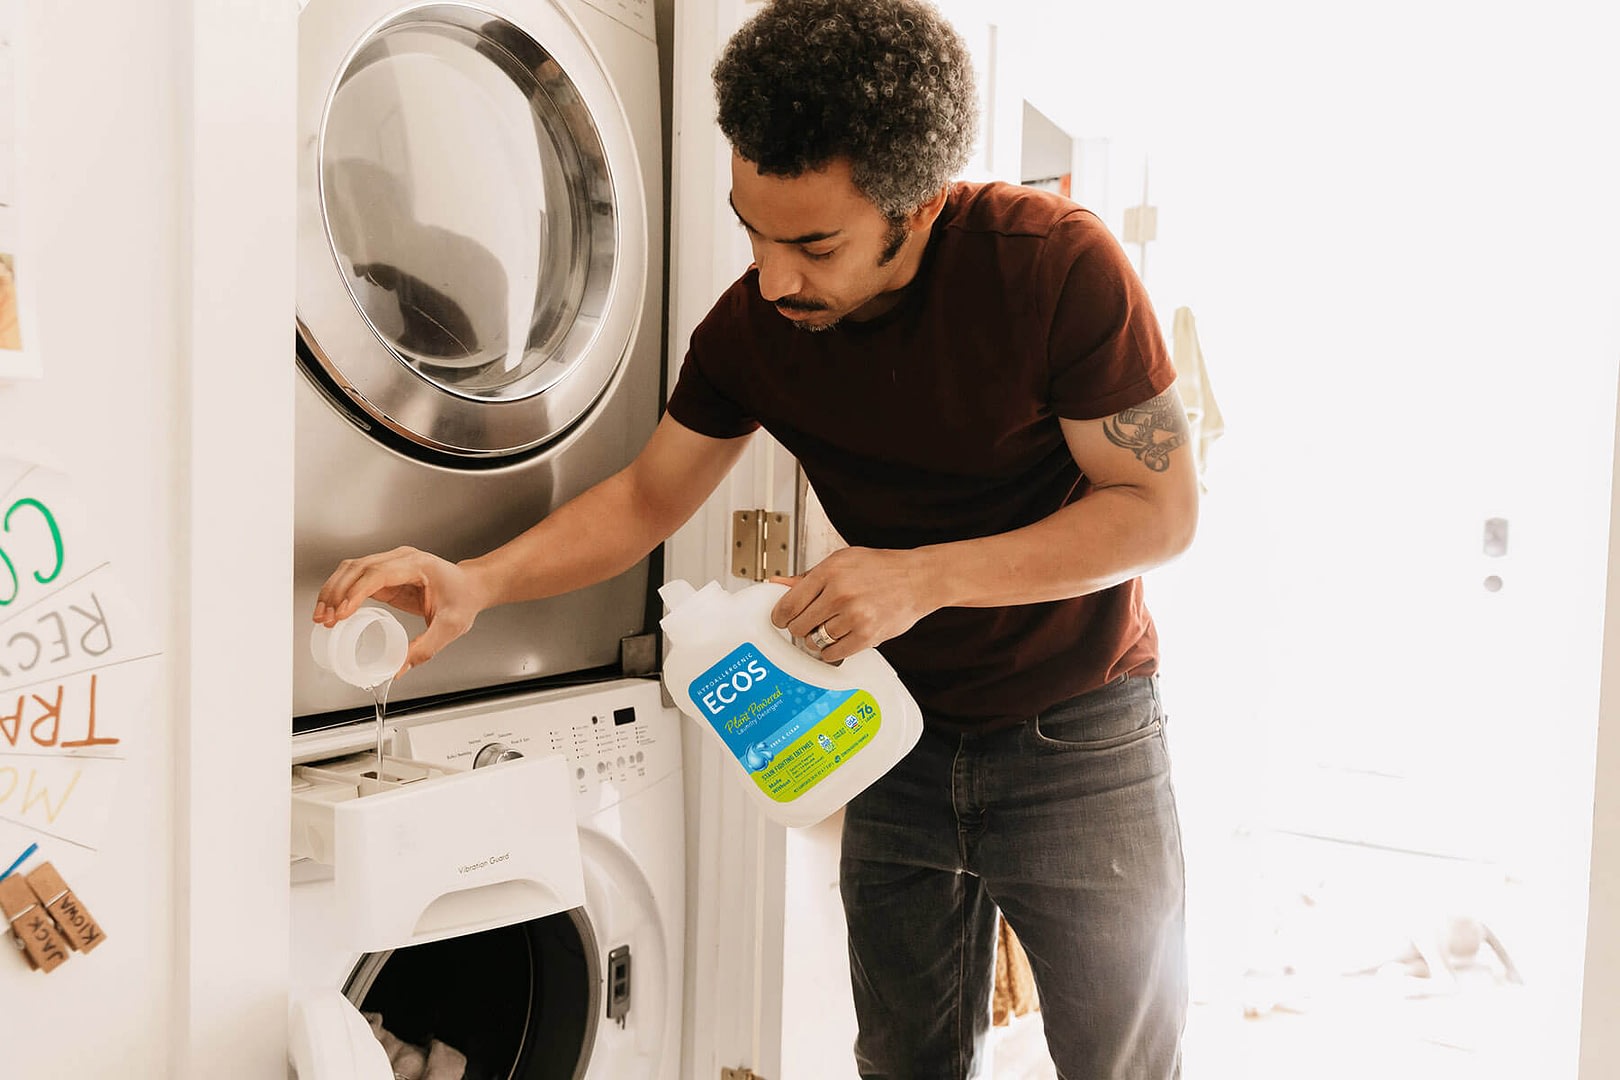 Man using ECOS laundry detergent